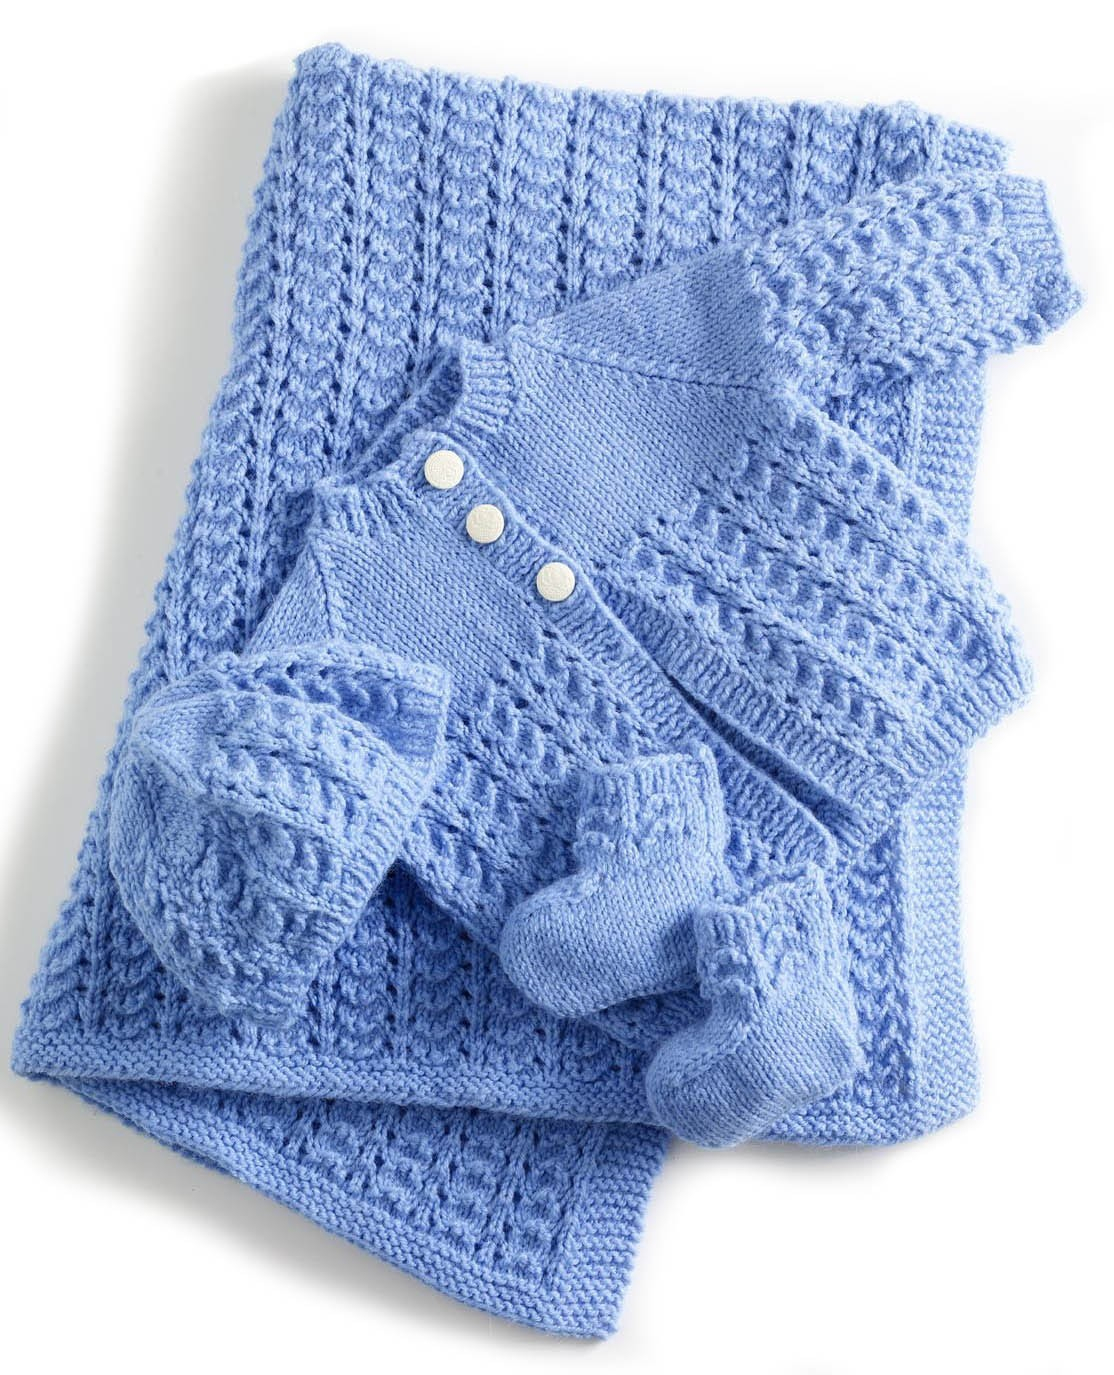 Free Uk Baby Knitting Patterns Cotton Crochet Craft Blog Crochet Patterns